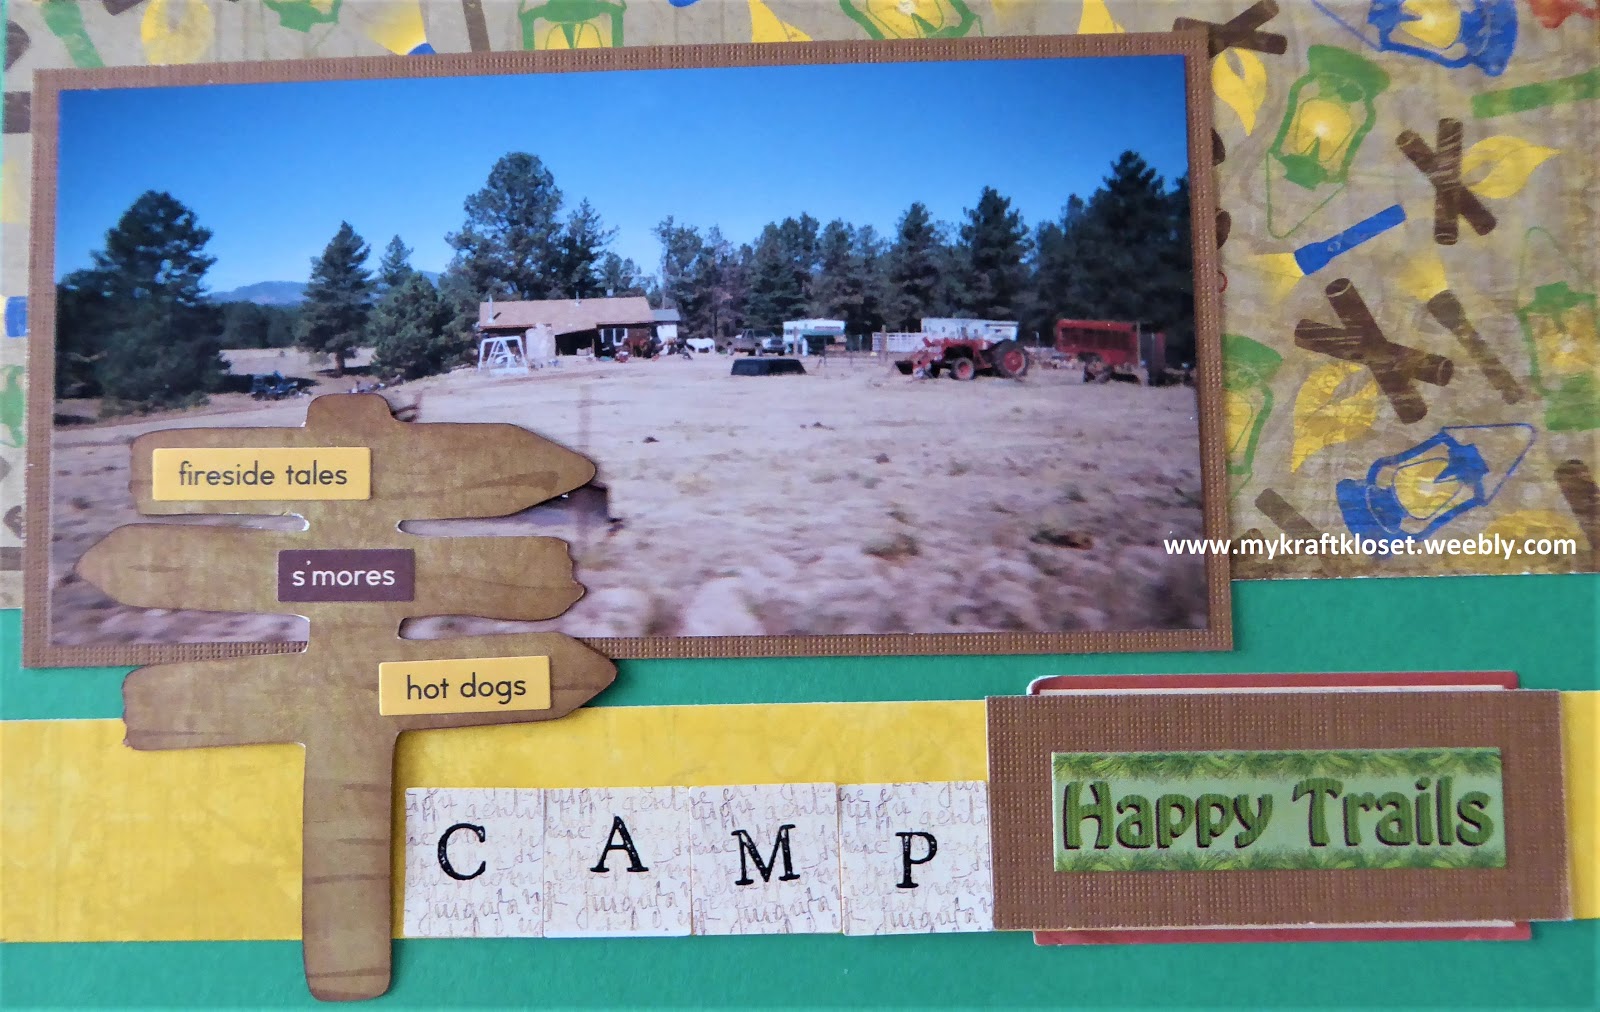 Craft Fantastic Blog: 8x8 Camping Scrapbook Layout